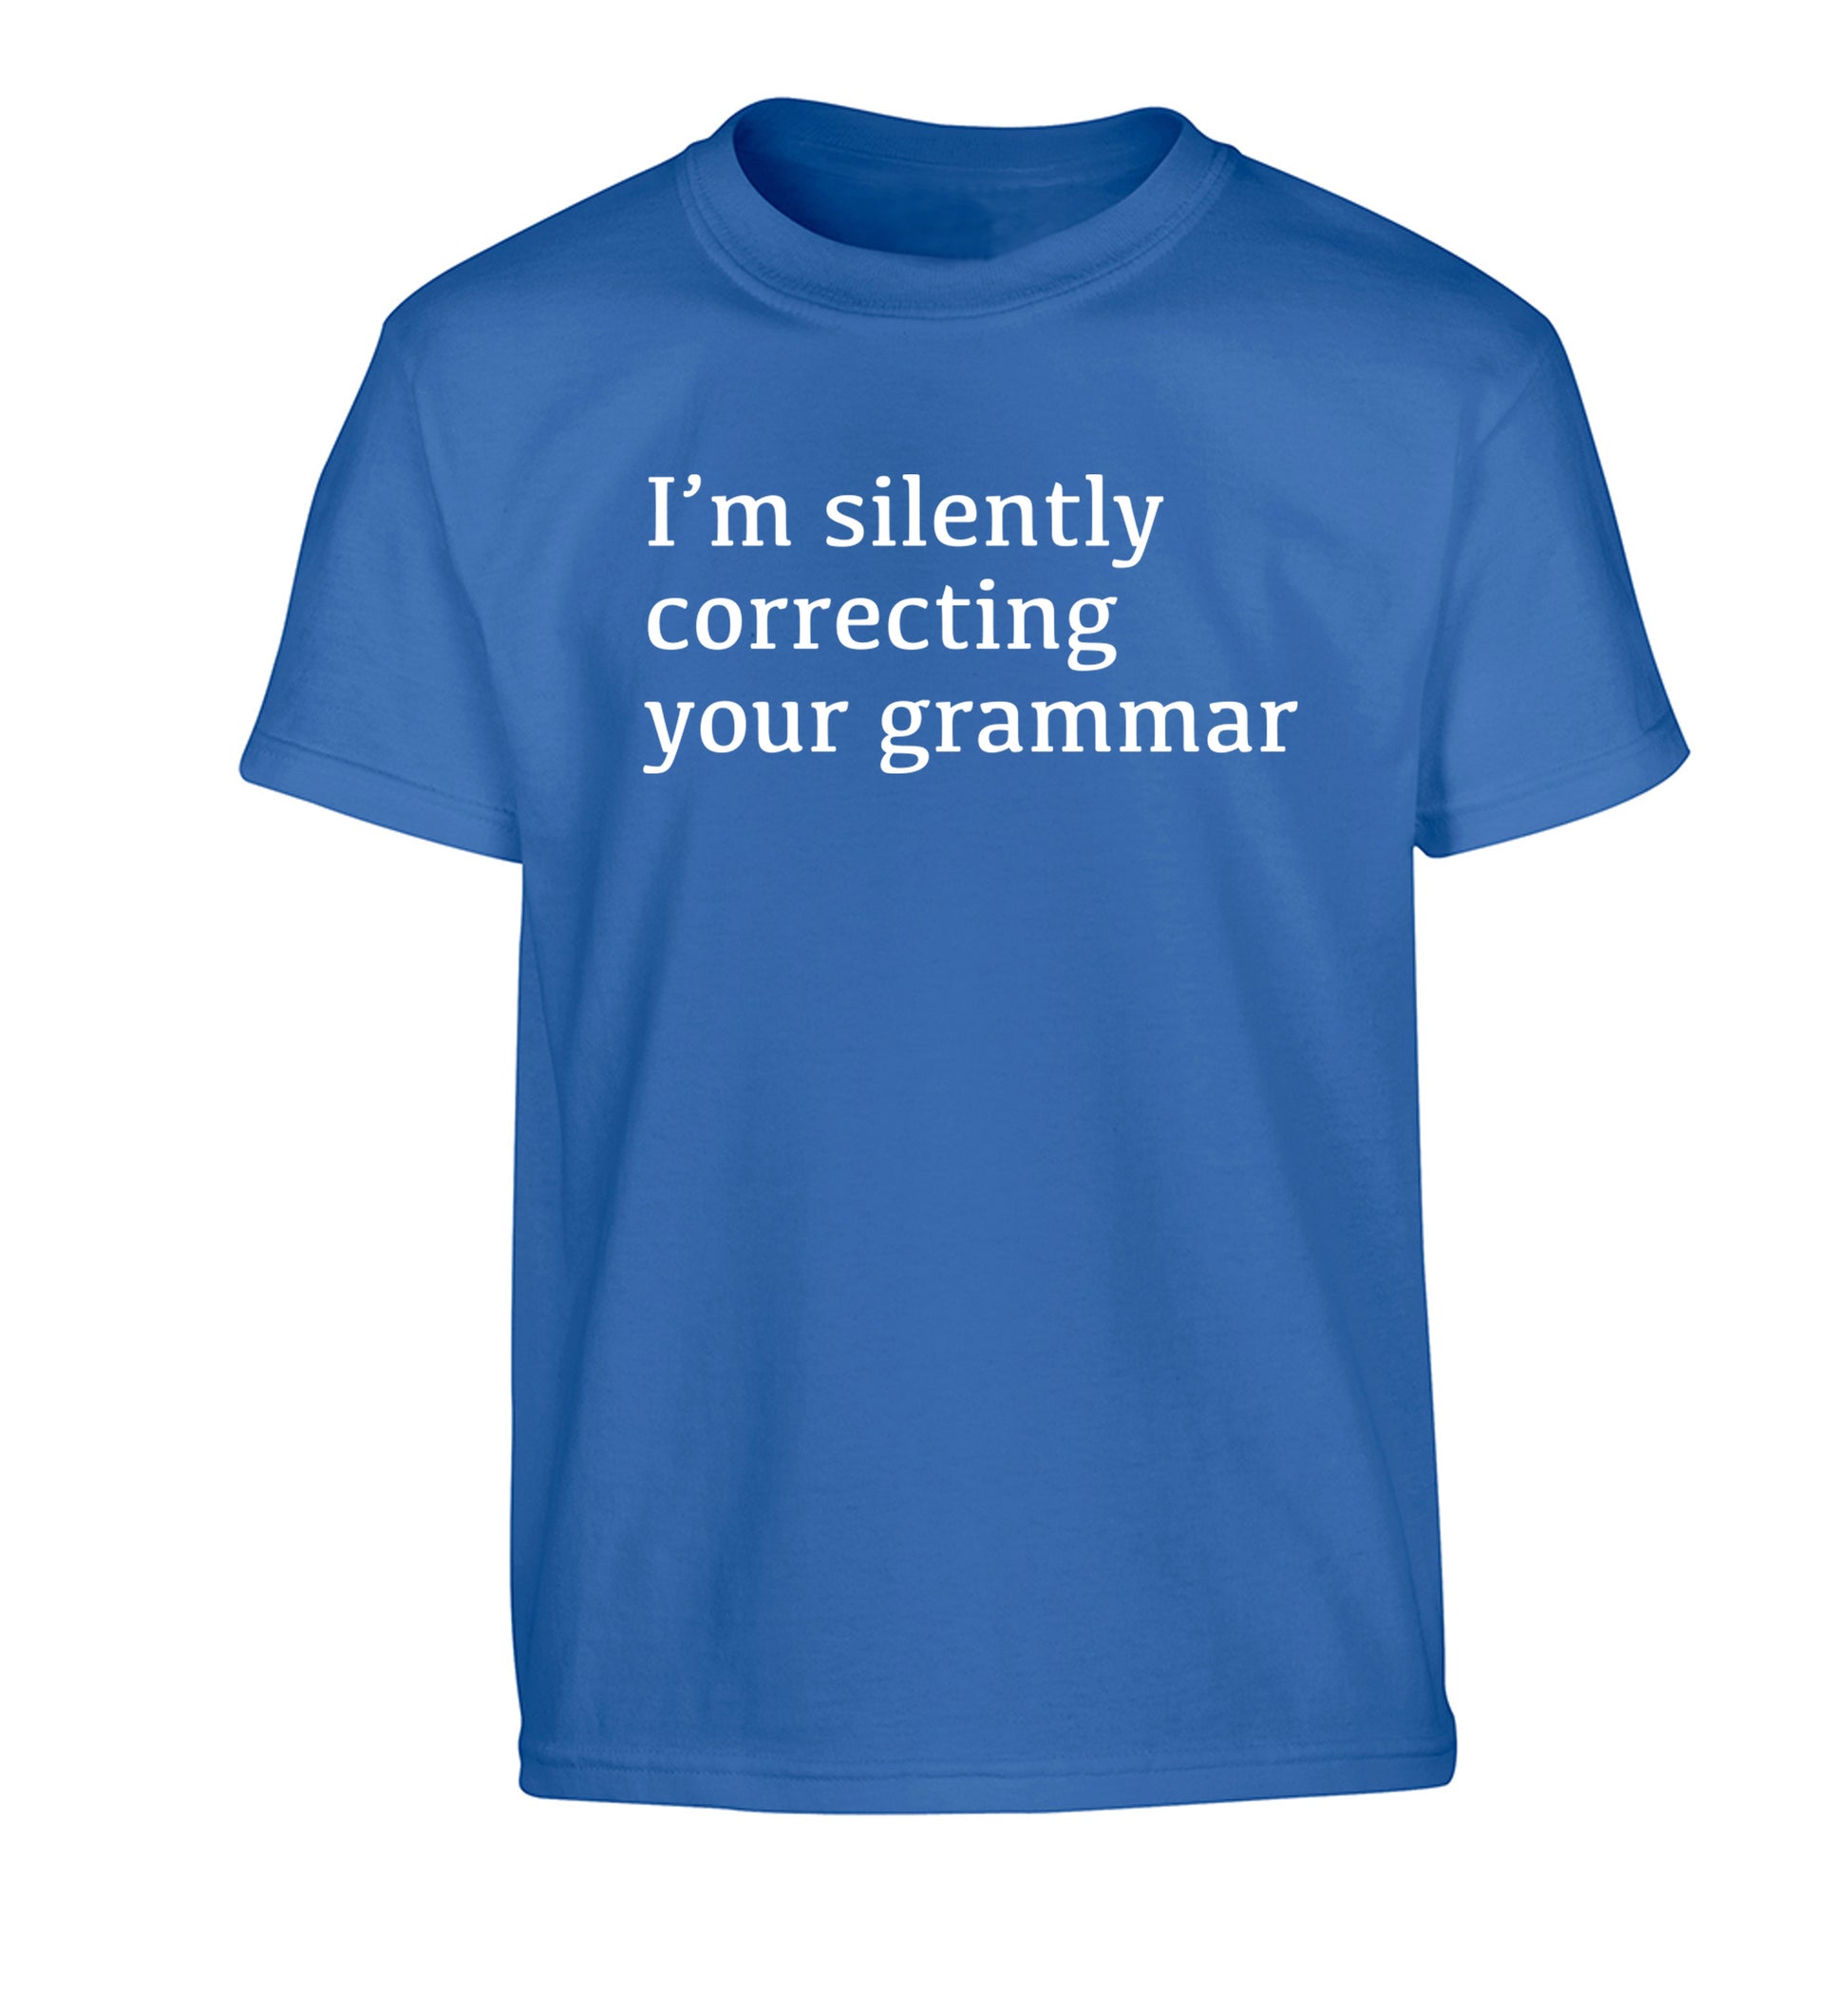 I'm silently correcting your grammar  Children's blue Tshirt 12-14 Years